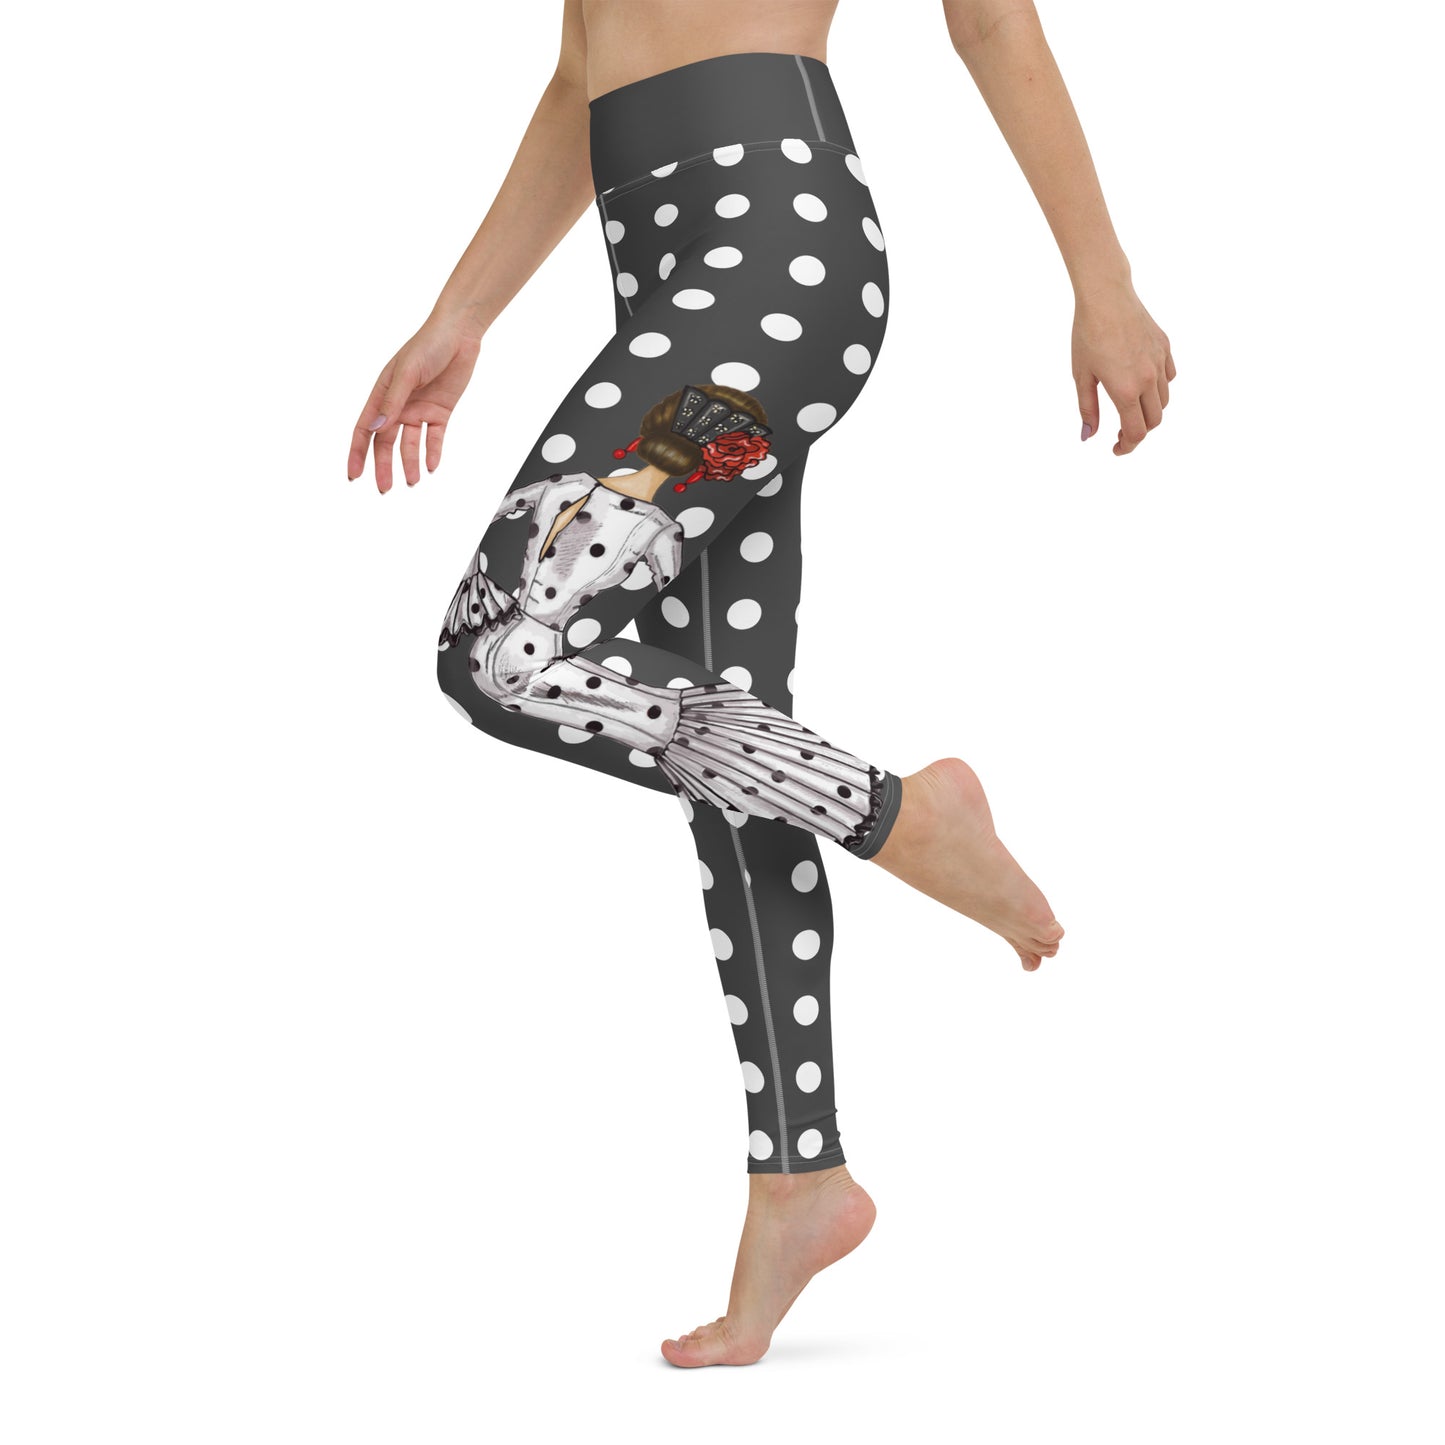 Flamenco Dancer Leggings, gray high waisted yoga leggings with a white dress and black polka dots design - IllustrArte